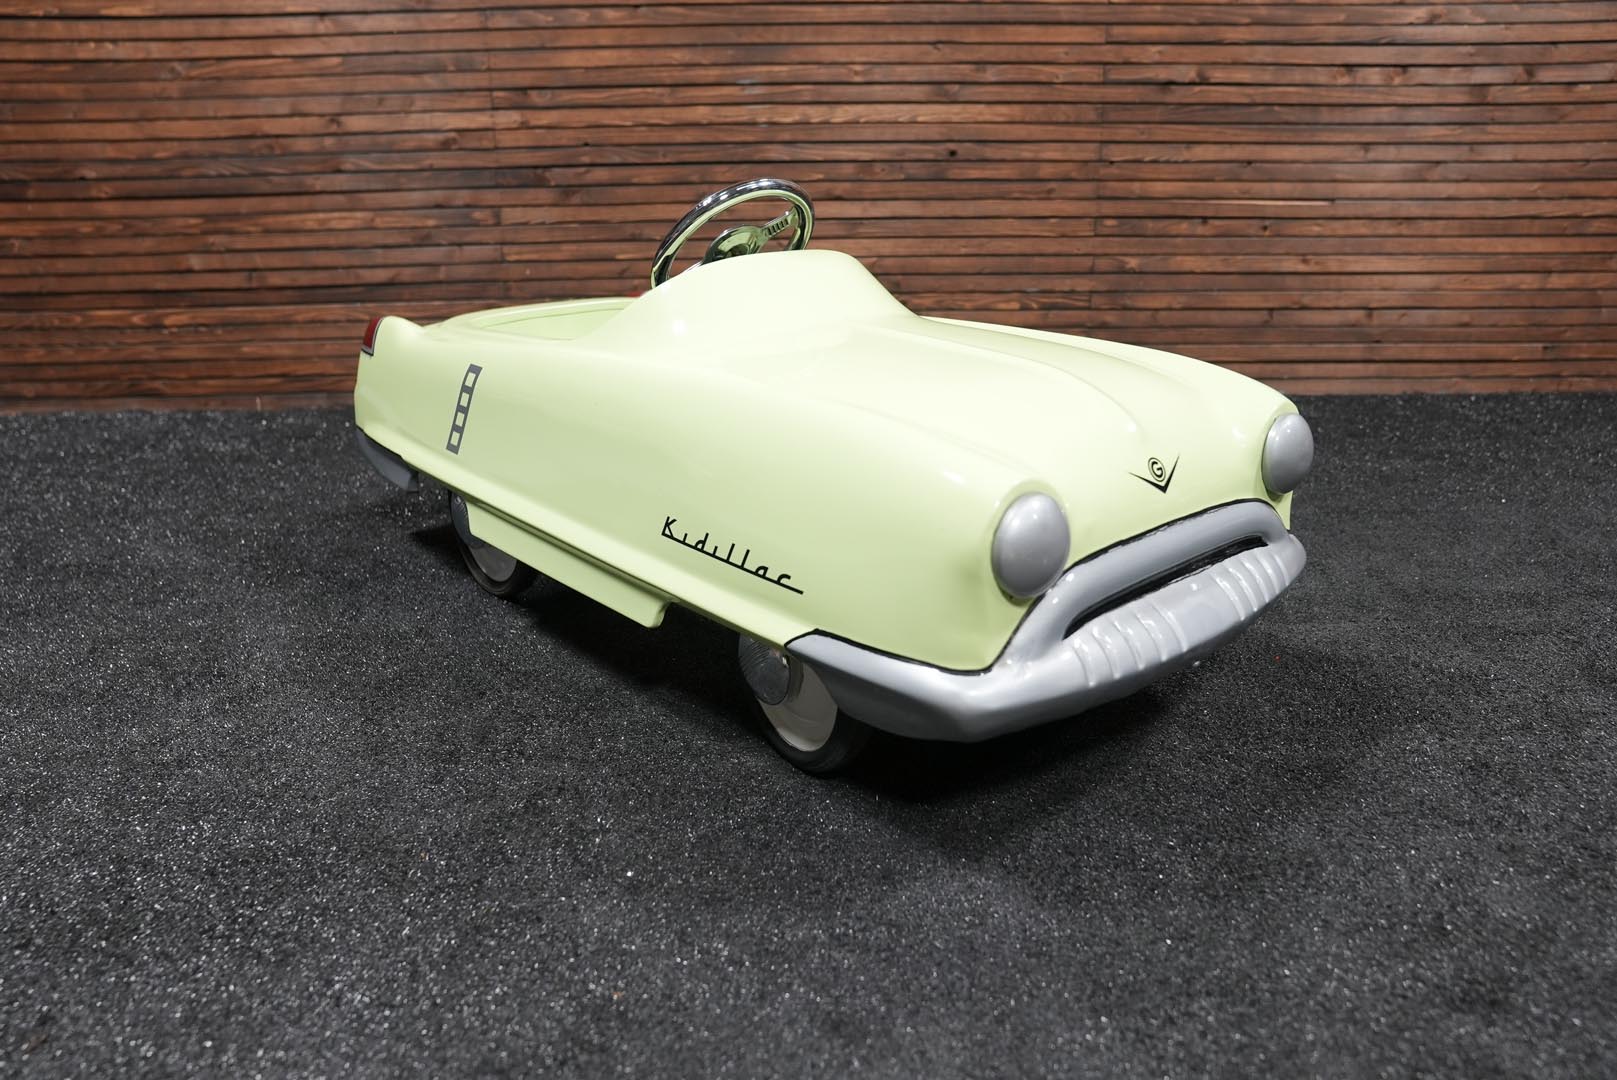 1953 Garton Kidillac Pedal Car- Restored